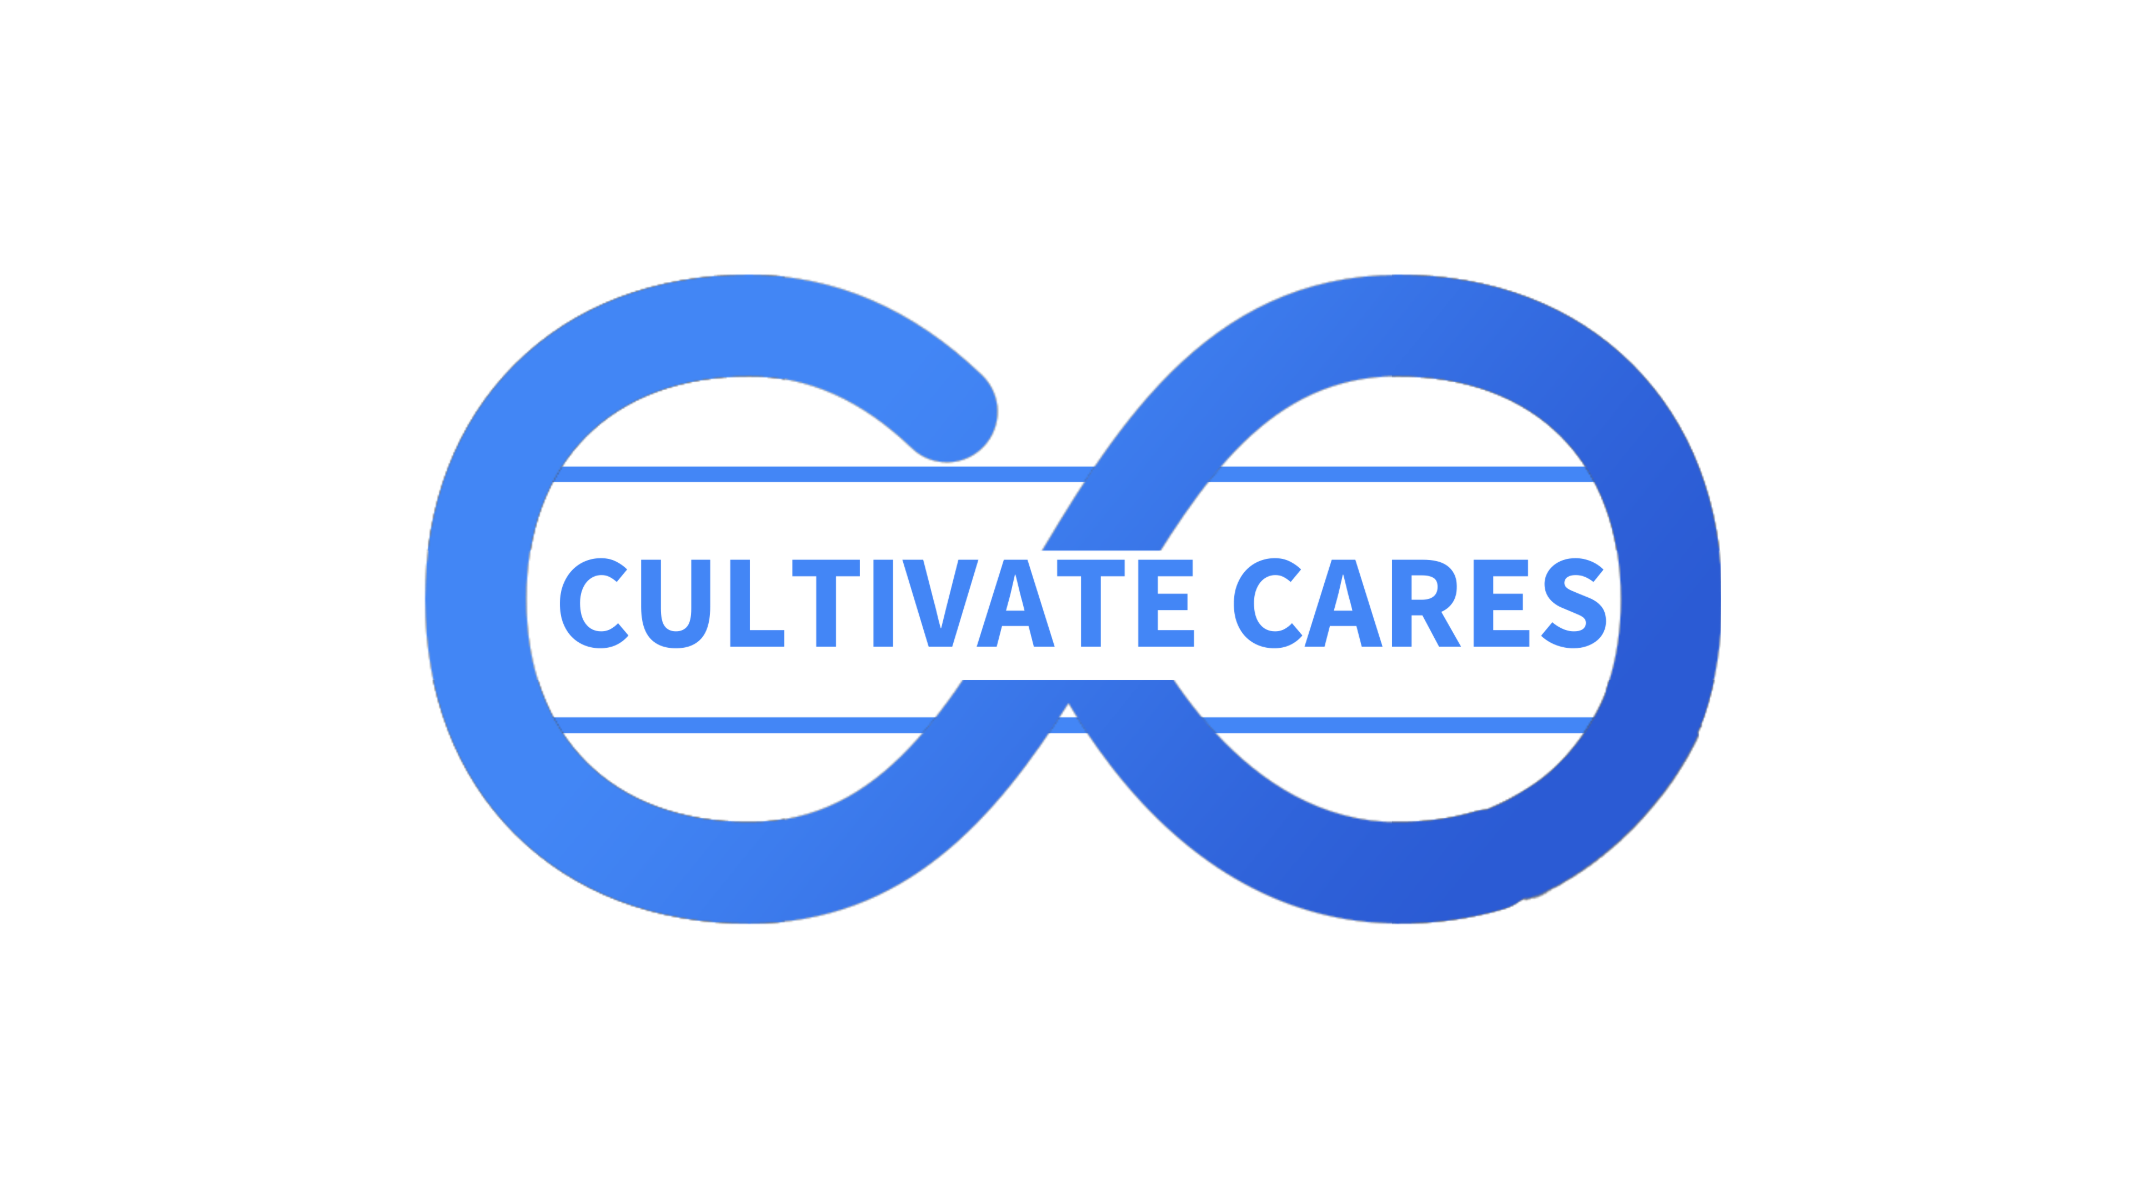 Cultivate cares (2)